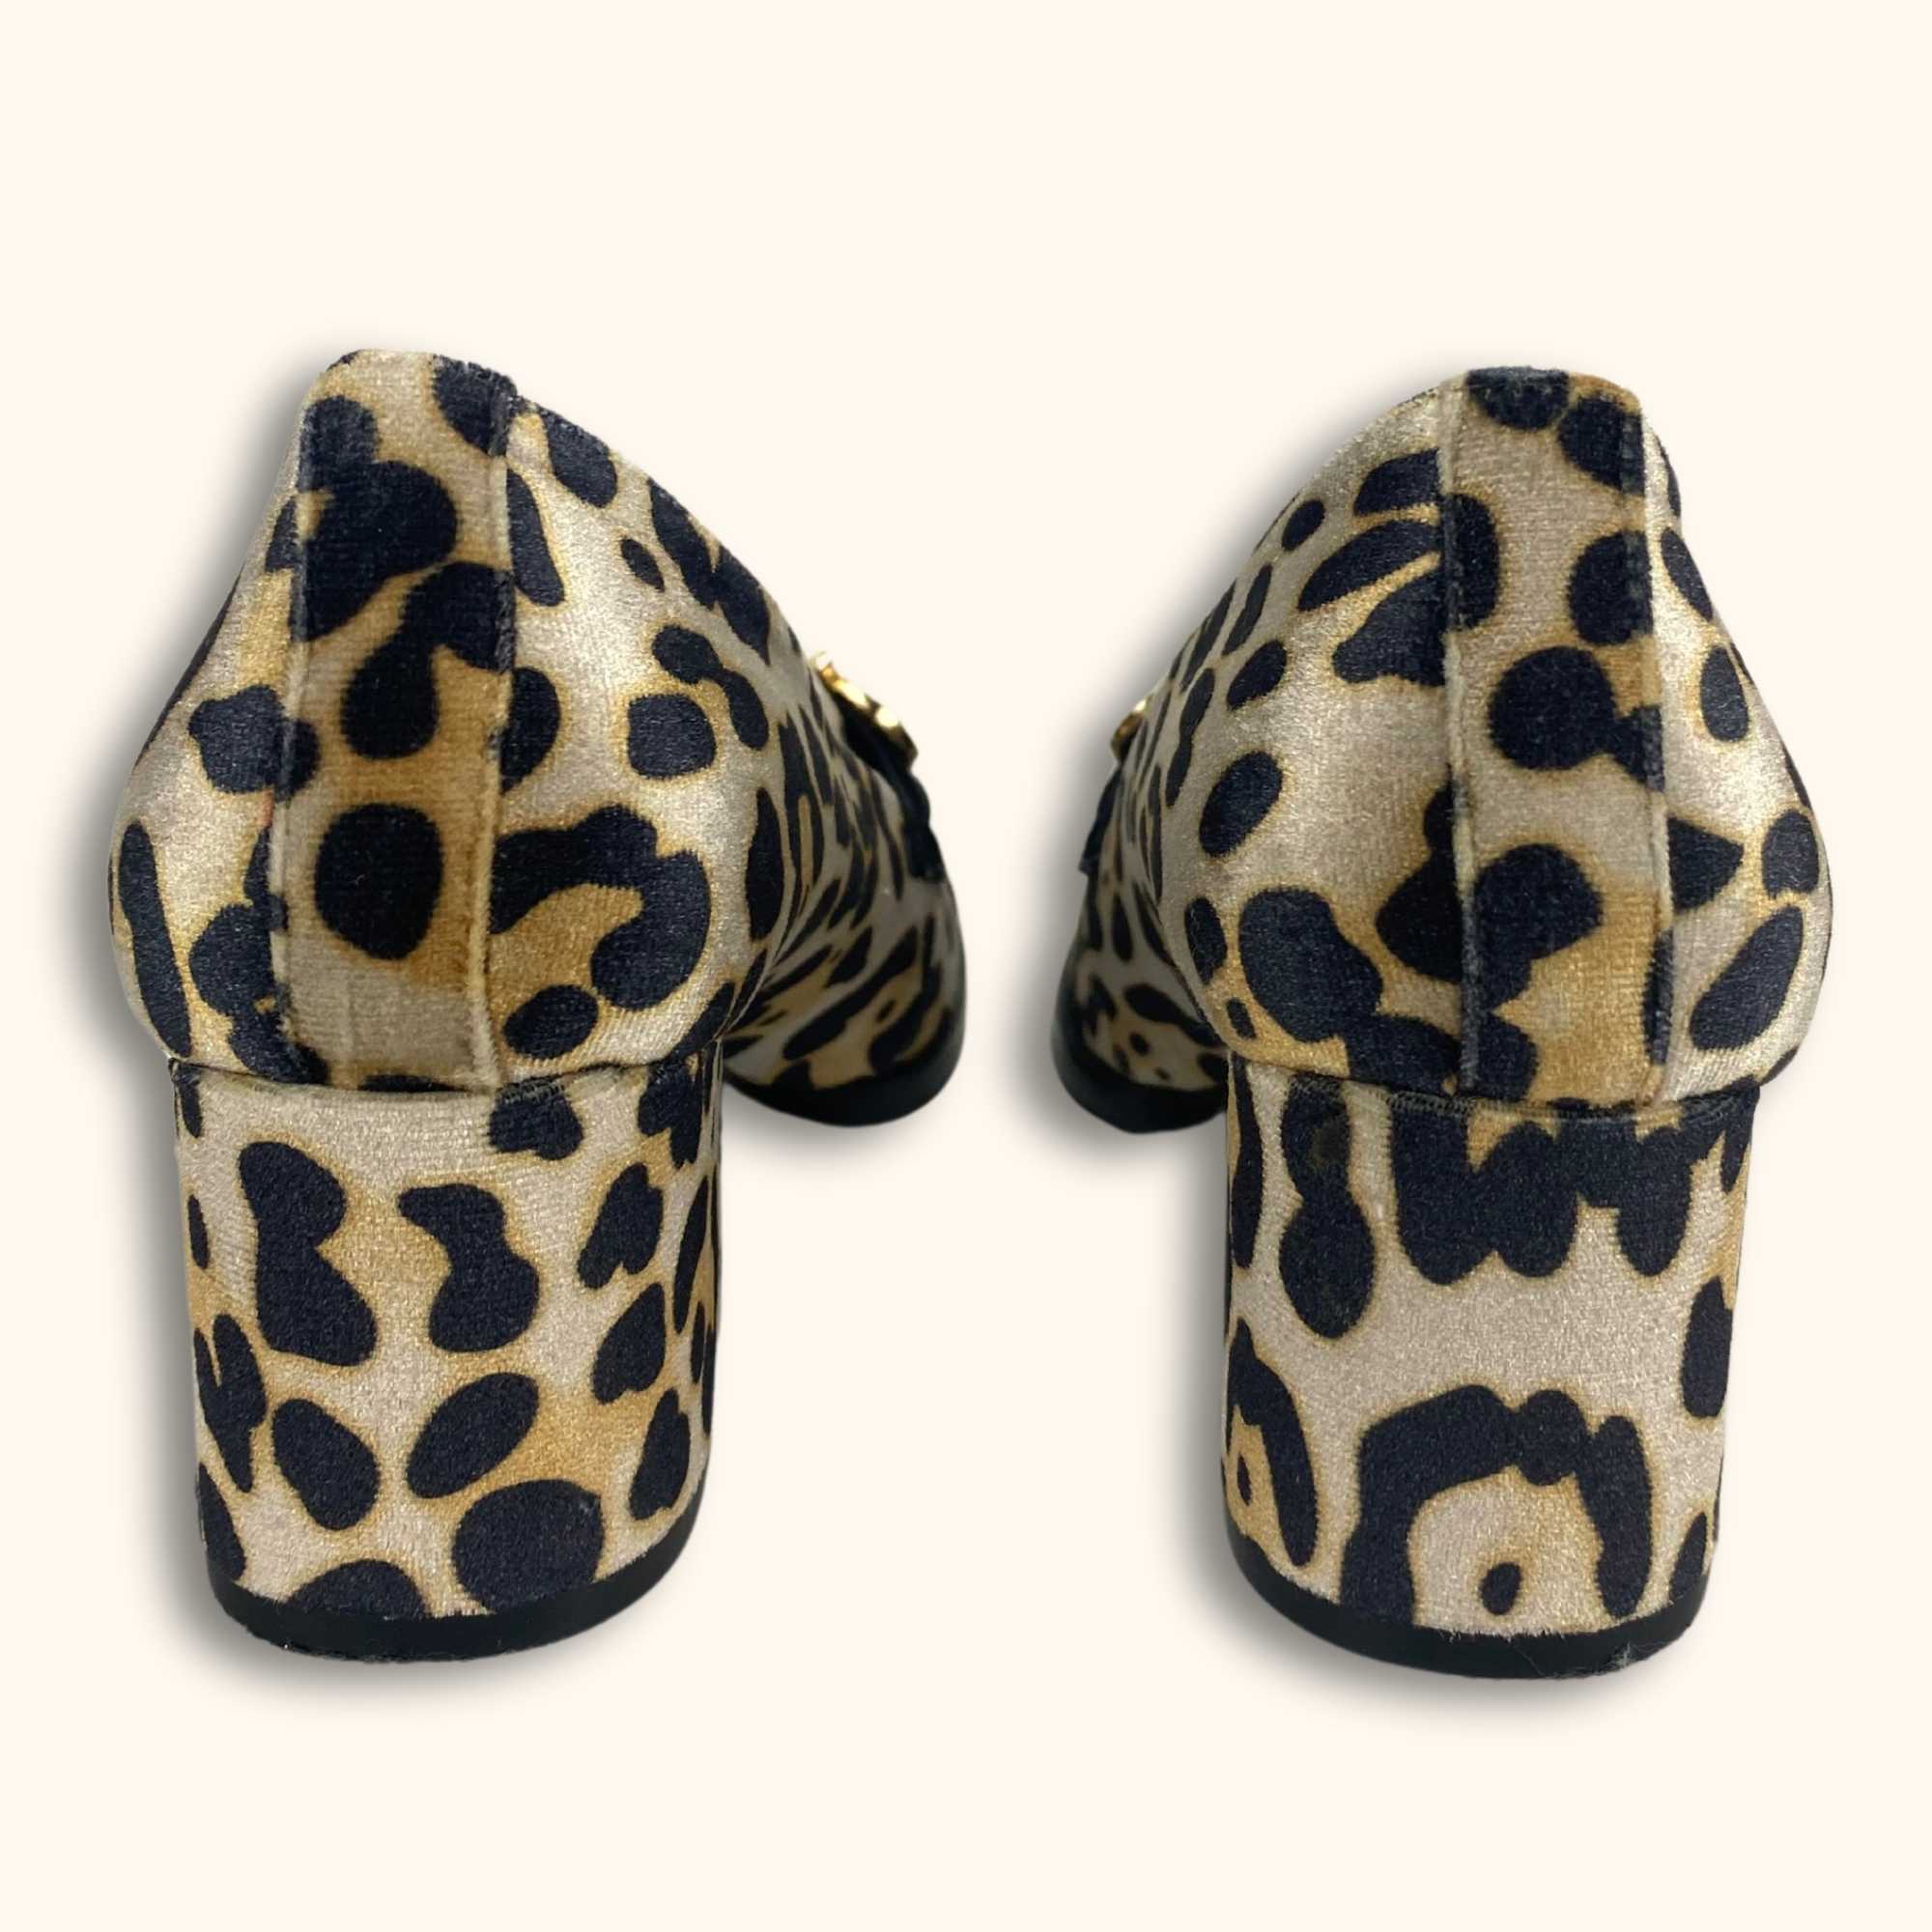 ASOS DESIGN Chunky Heeled Loafers Leopard velvet - Size 3 - ASOS - Heels